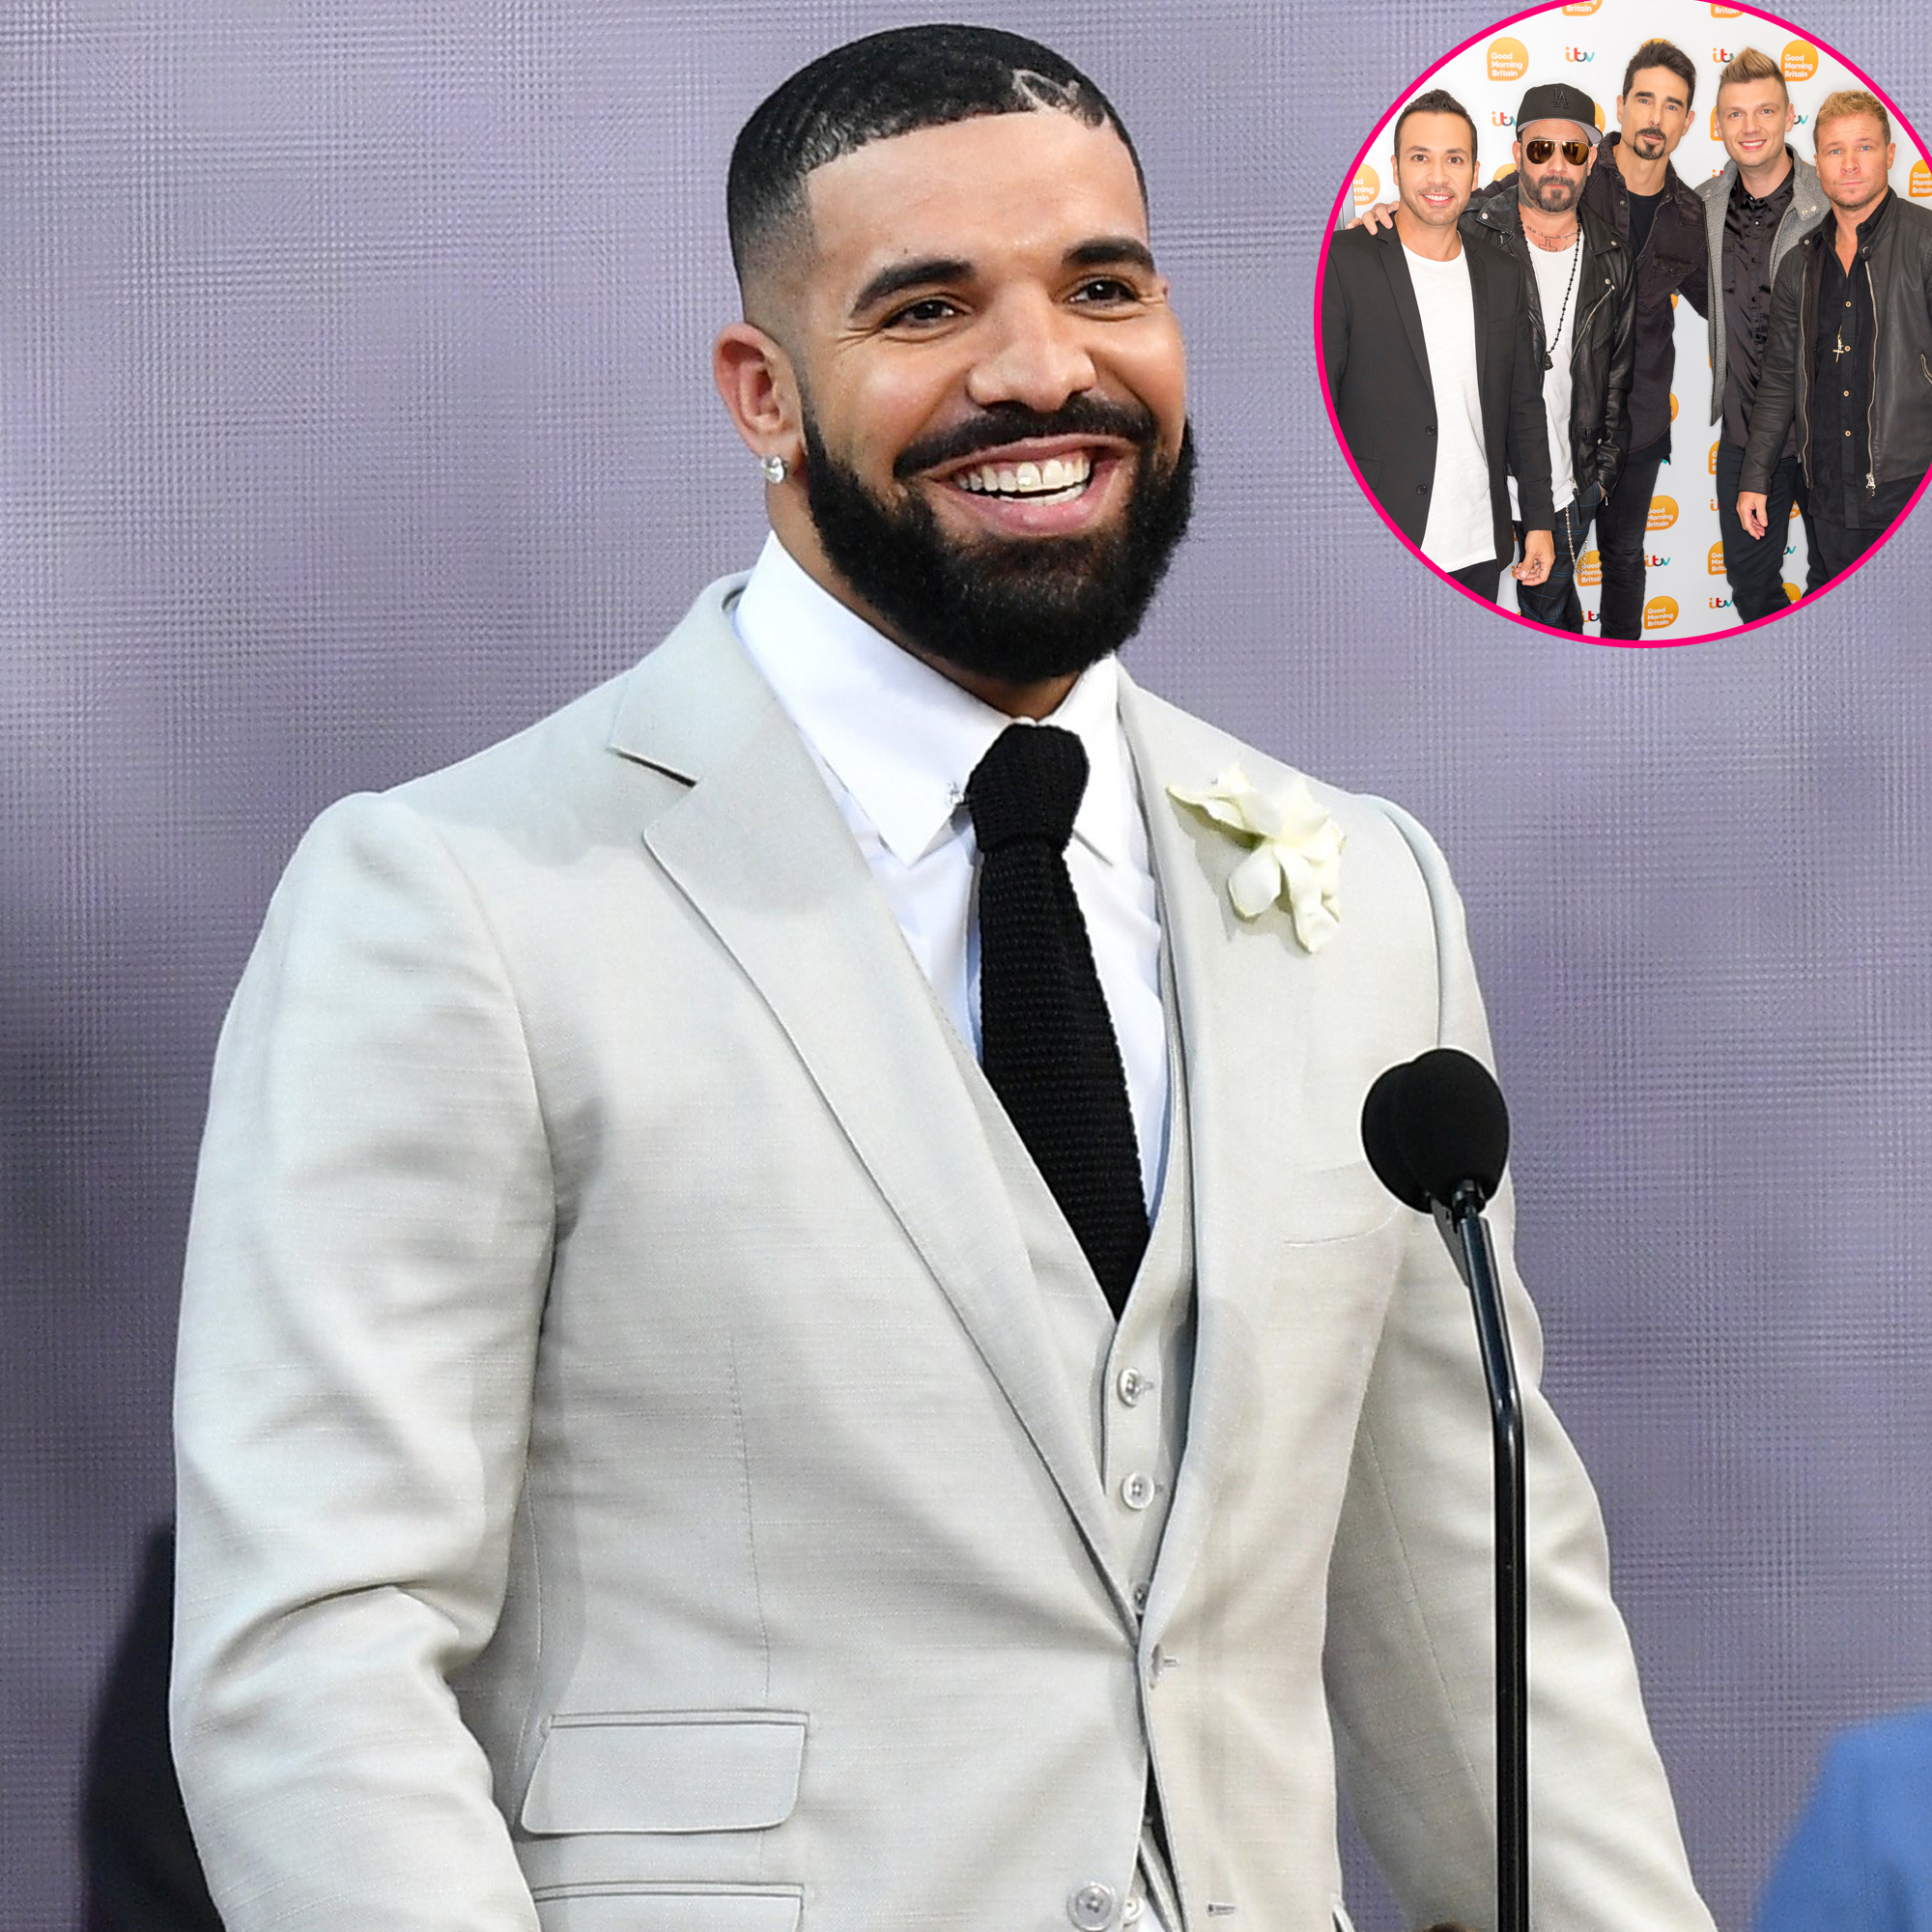 Backstreet Boys Call Drake Their 'Sixth Member' as He Joins Them